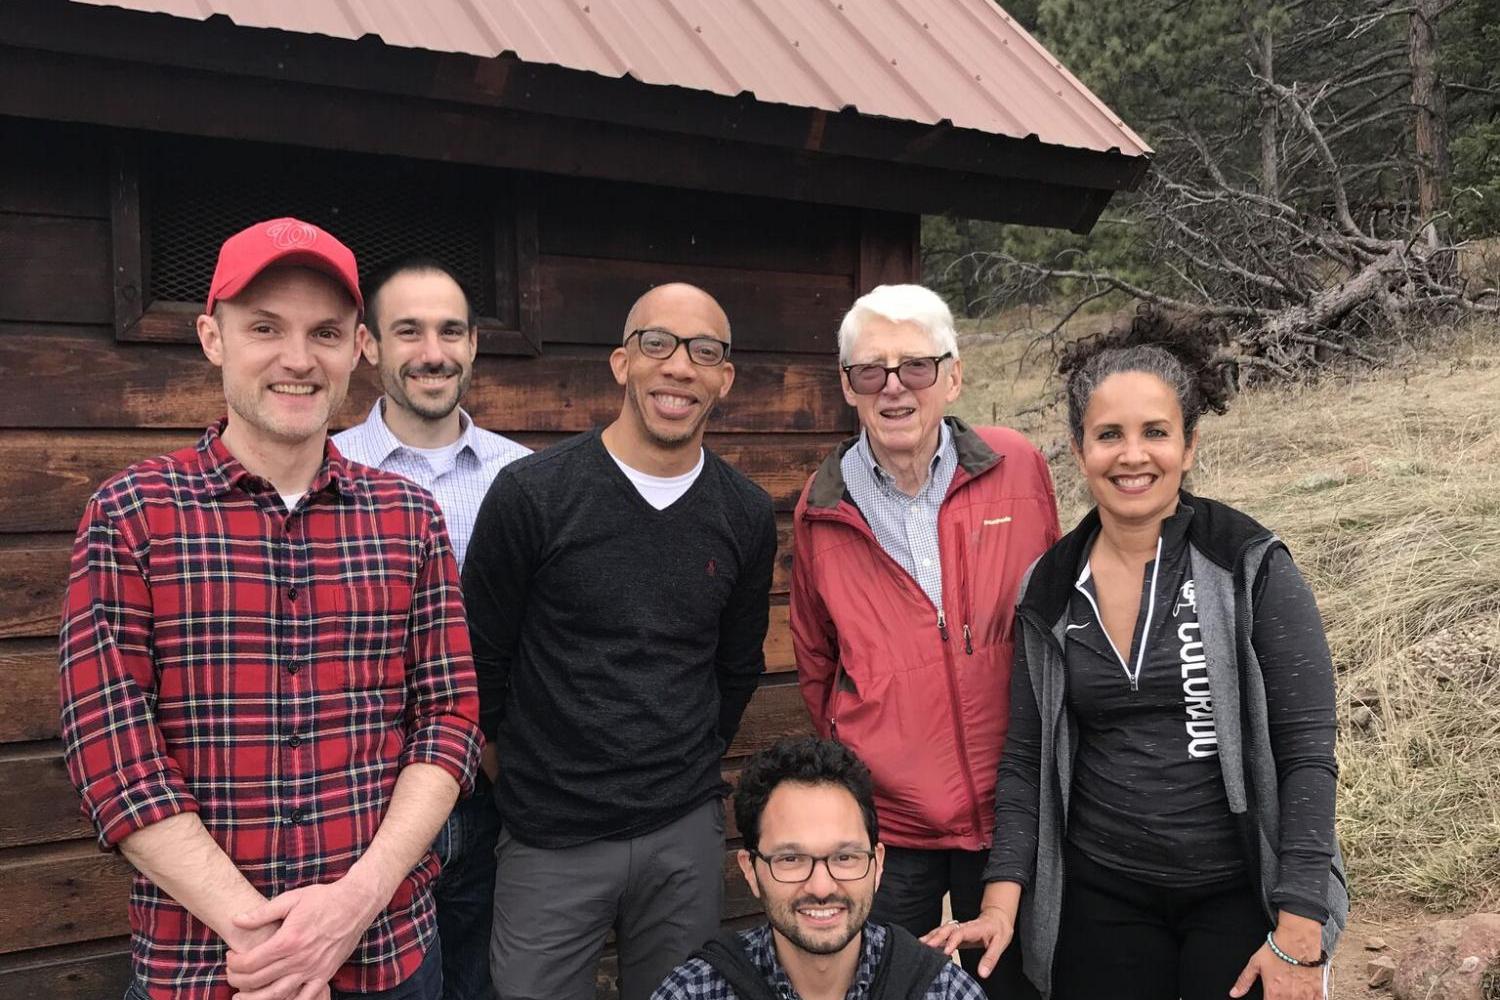 Rothberger scholars together for a hike in Boulder